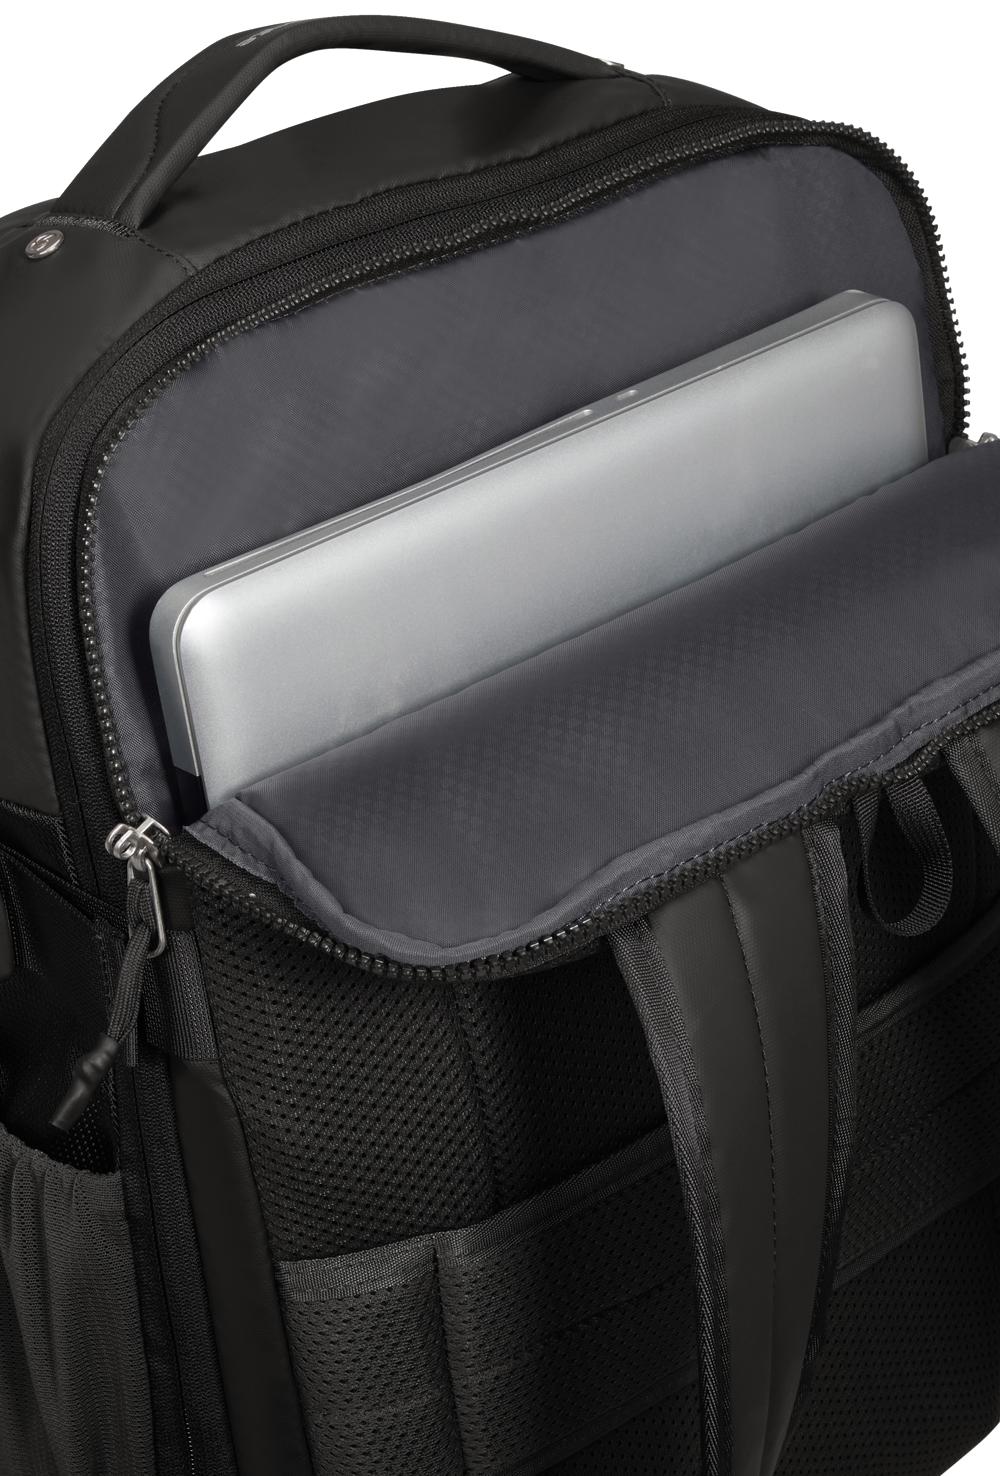 Samsonite MIDTOWN mochila para portatil L 15.6 camo